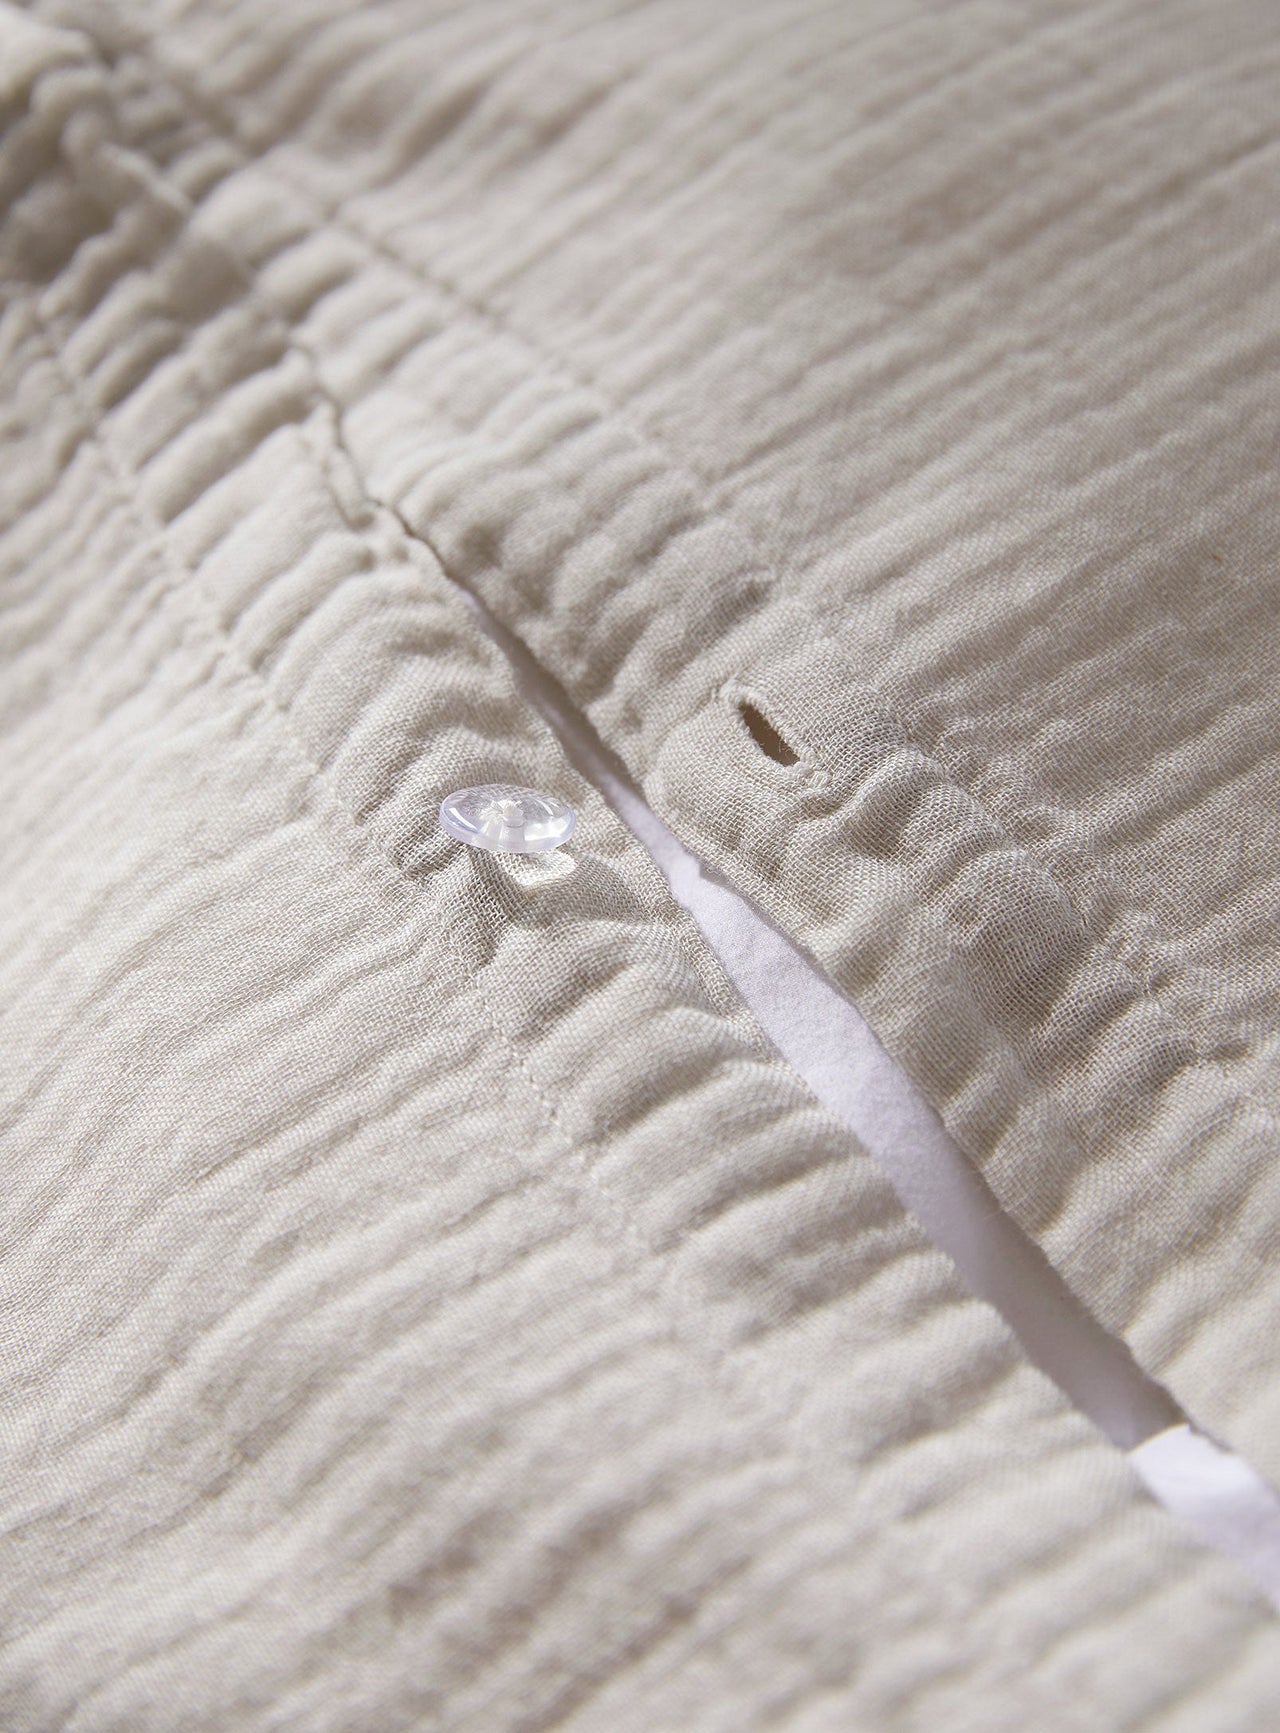 Pre-washed pure cotton duvet cover set